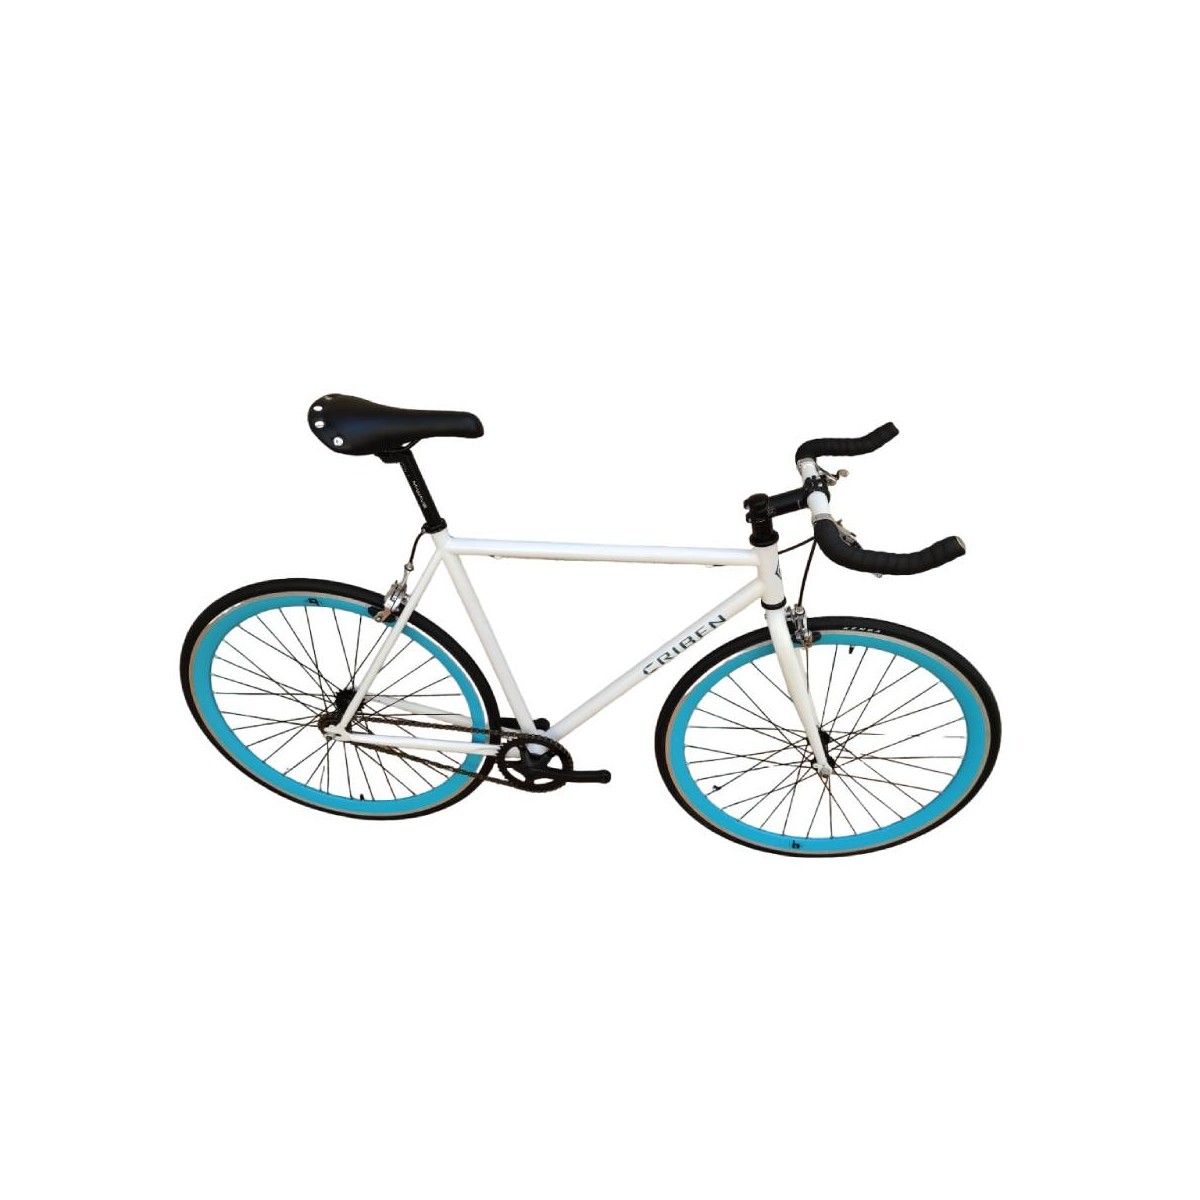 Bicicleta fixie blanca Criben y ruedas perfil